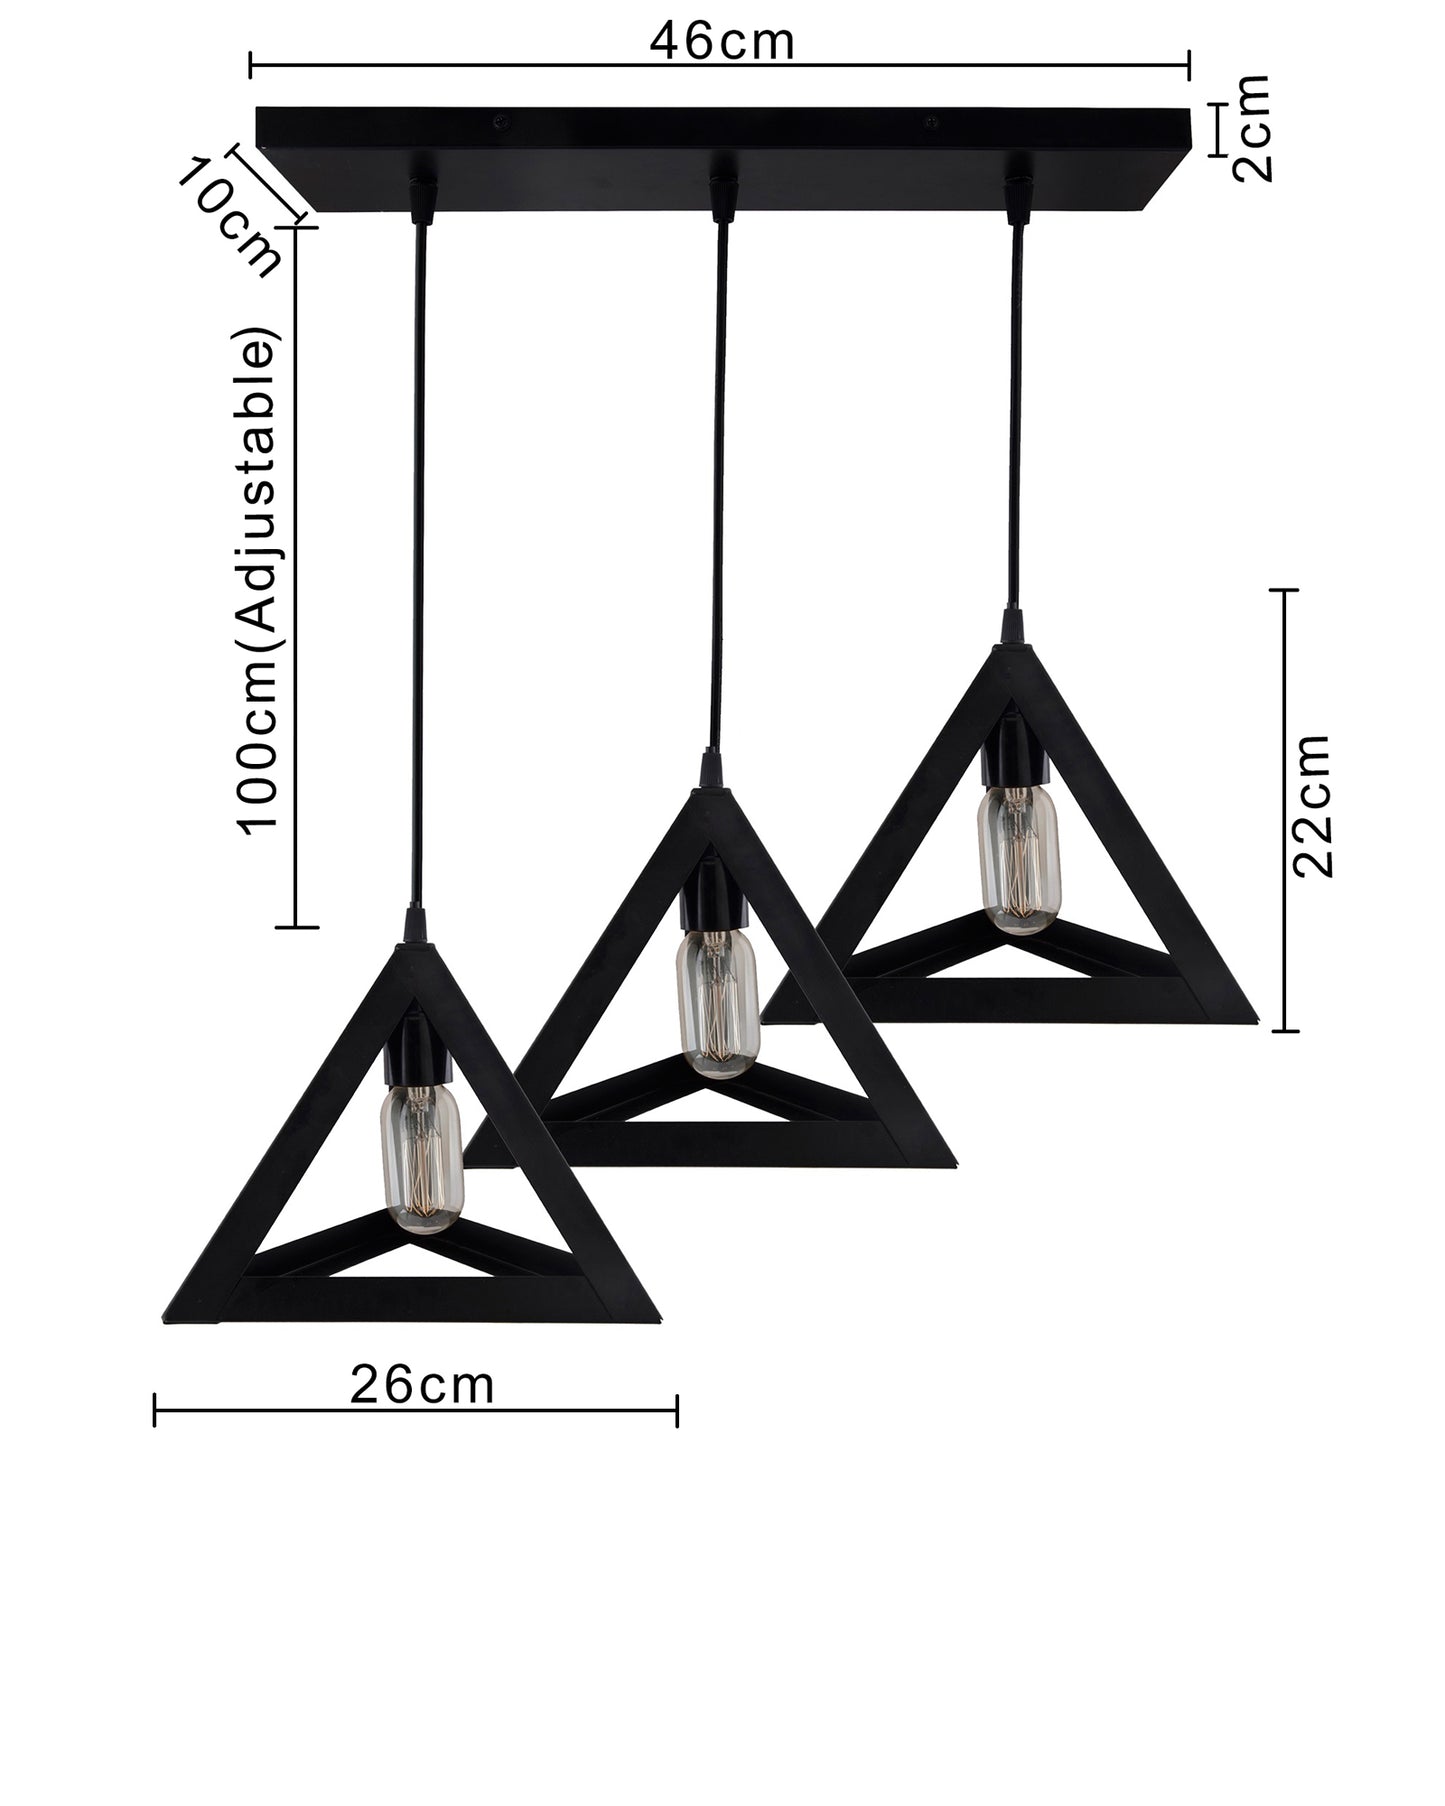 3-Lights Cluster Chandelier Triangle 6", E27 Holder, Decorative, Black, URBAN Retro, Nordic Style, LED/Filament Bulb